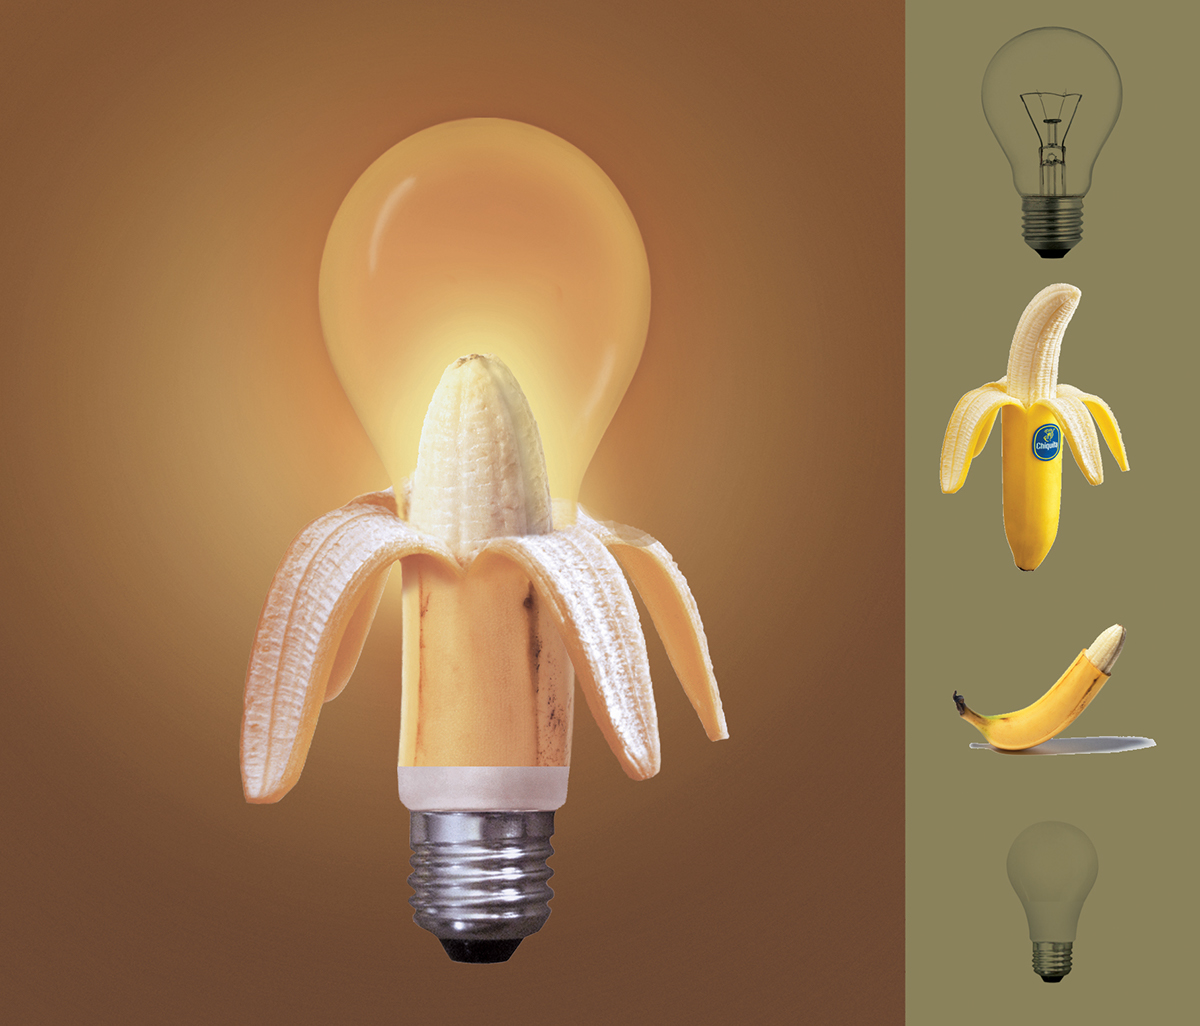 manipulation photoshop banana bulb idea